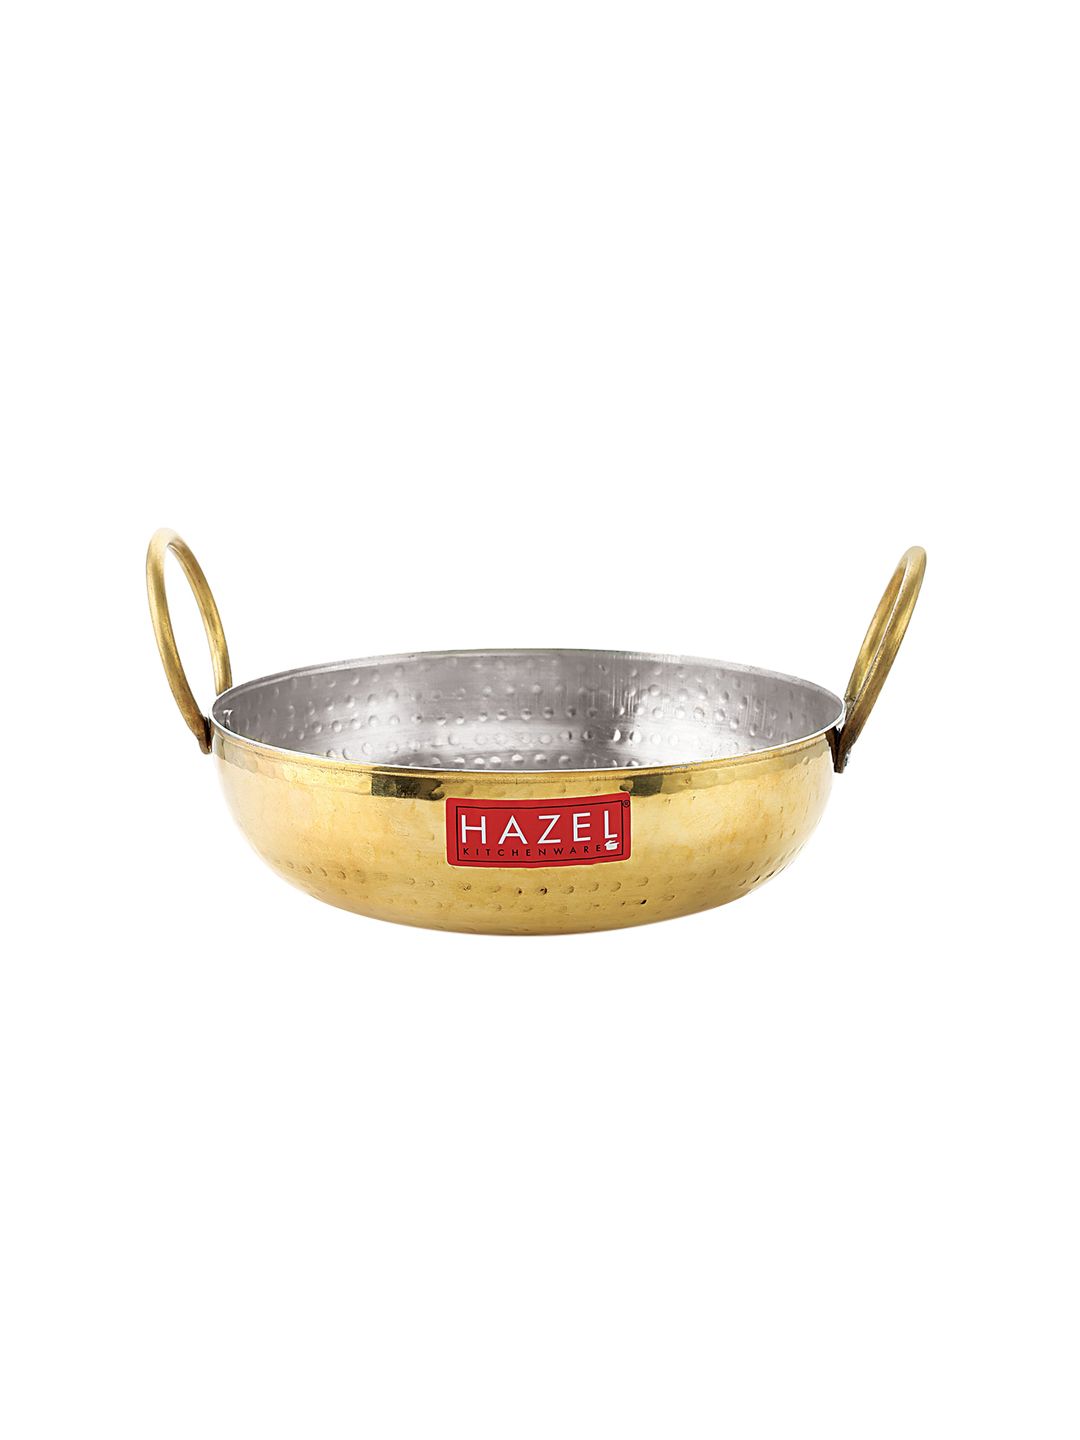 HAZEL  Gold-Toned Brass Kadai  Cookware Price in India